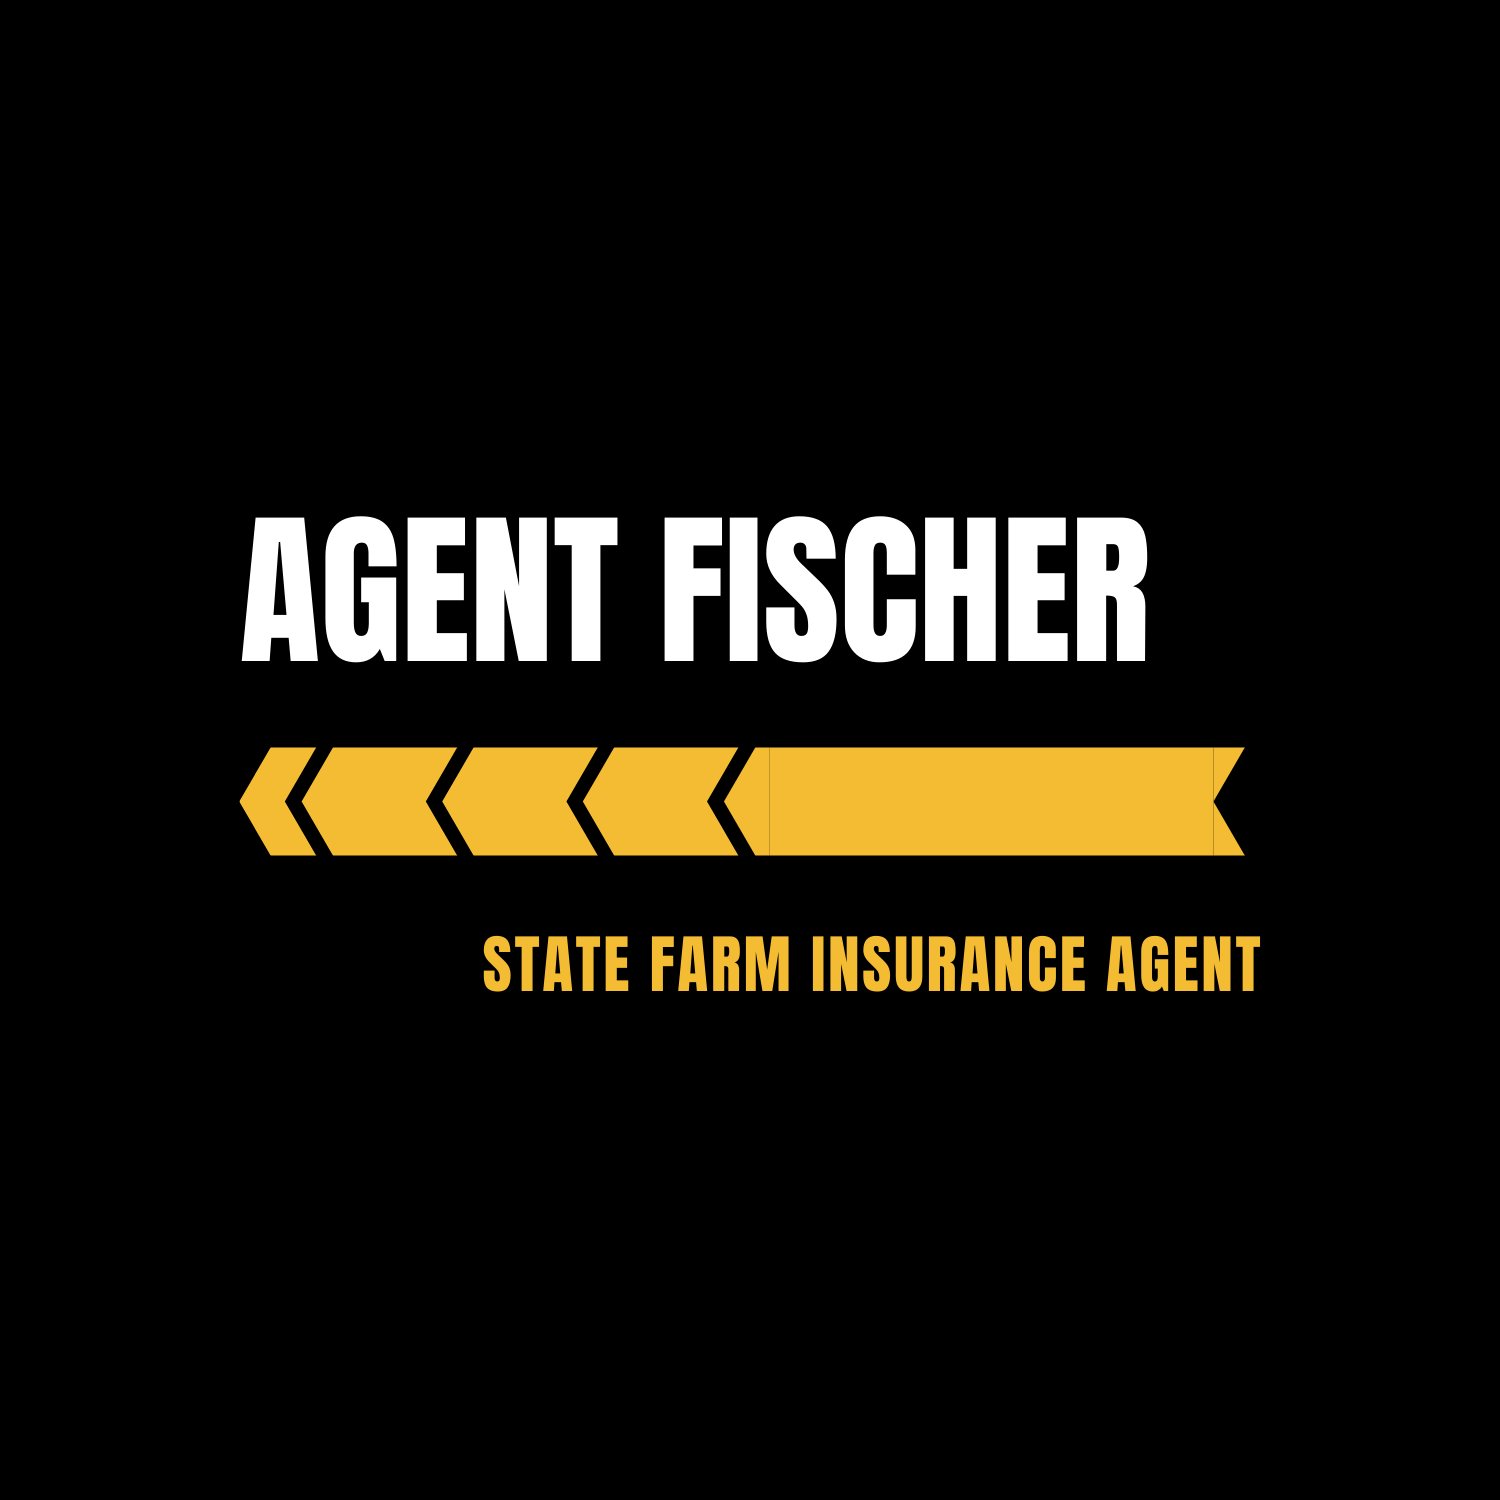 Agent Fischer - State Farm Insurance Agent's Logo